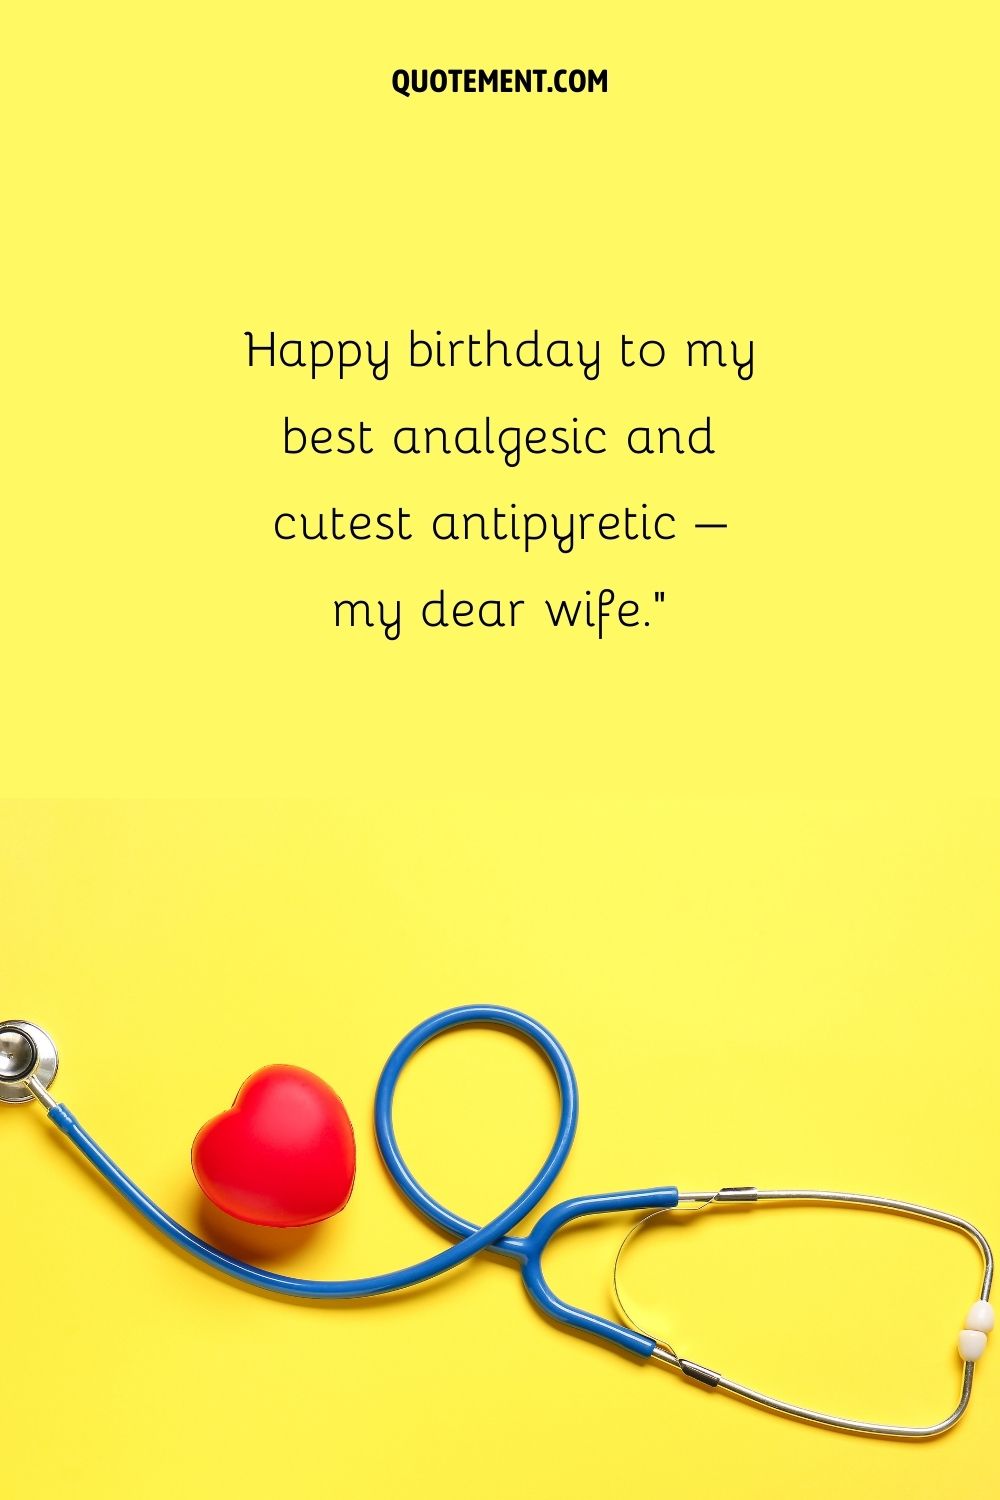 simple design birthday image representing funny happy birthday doctor wife wish